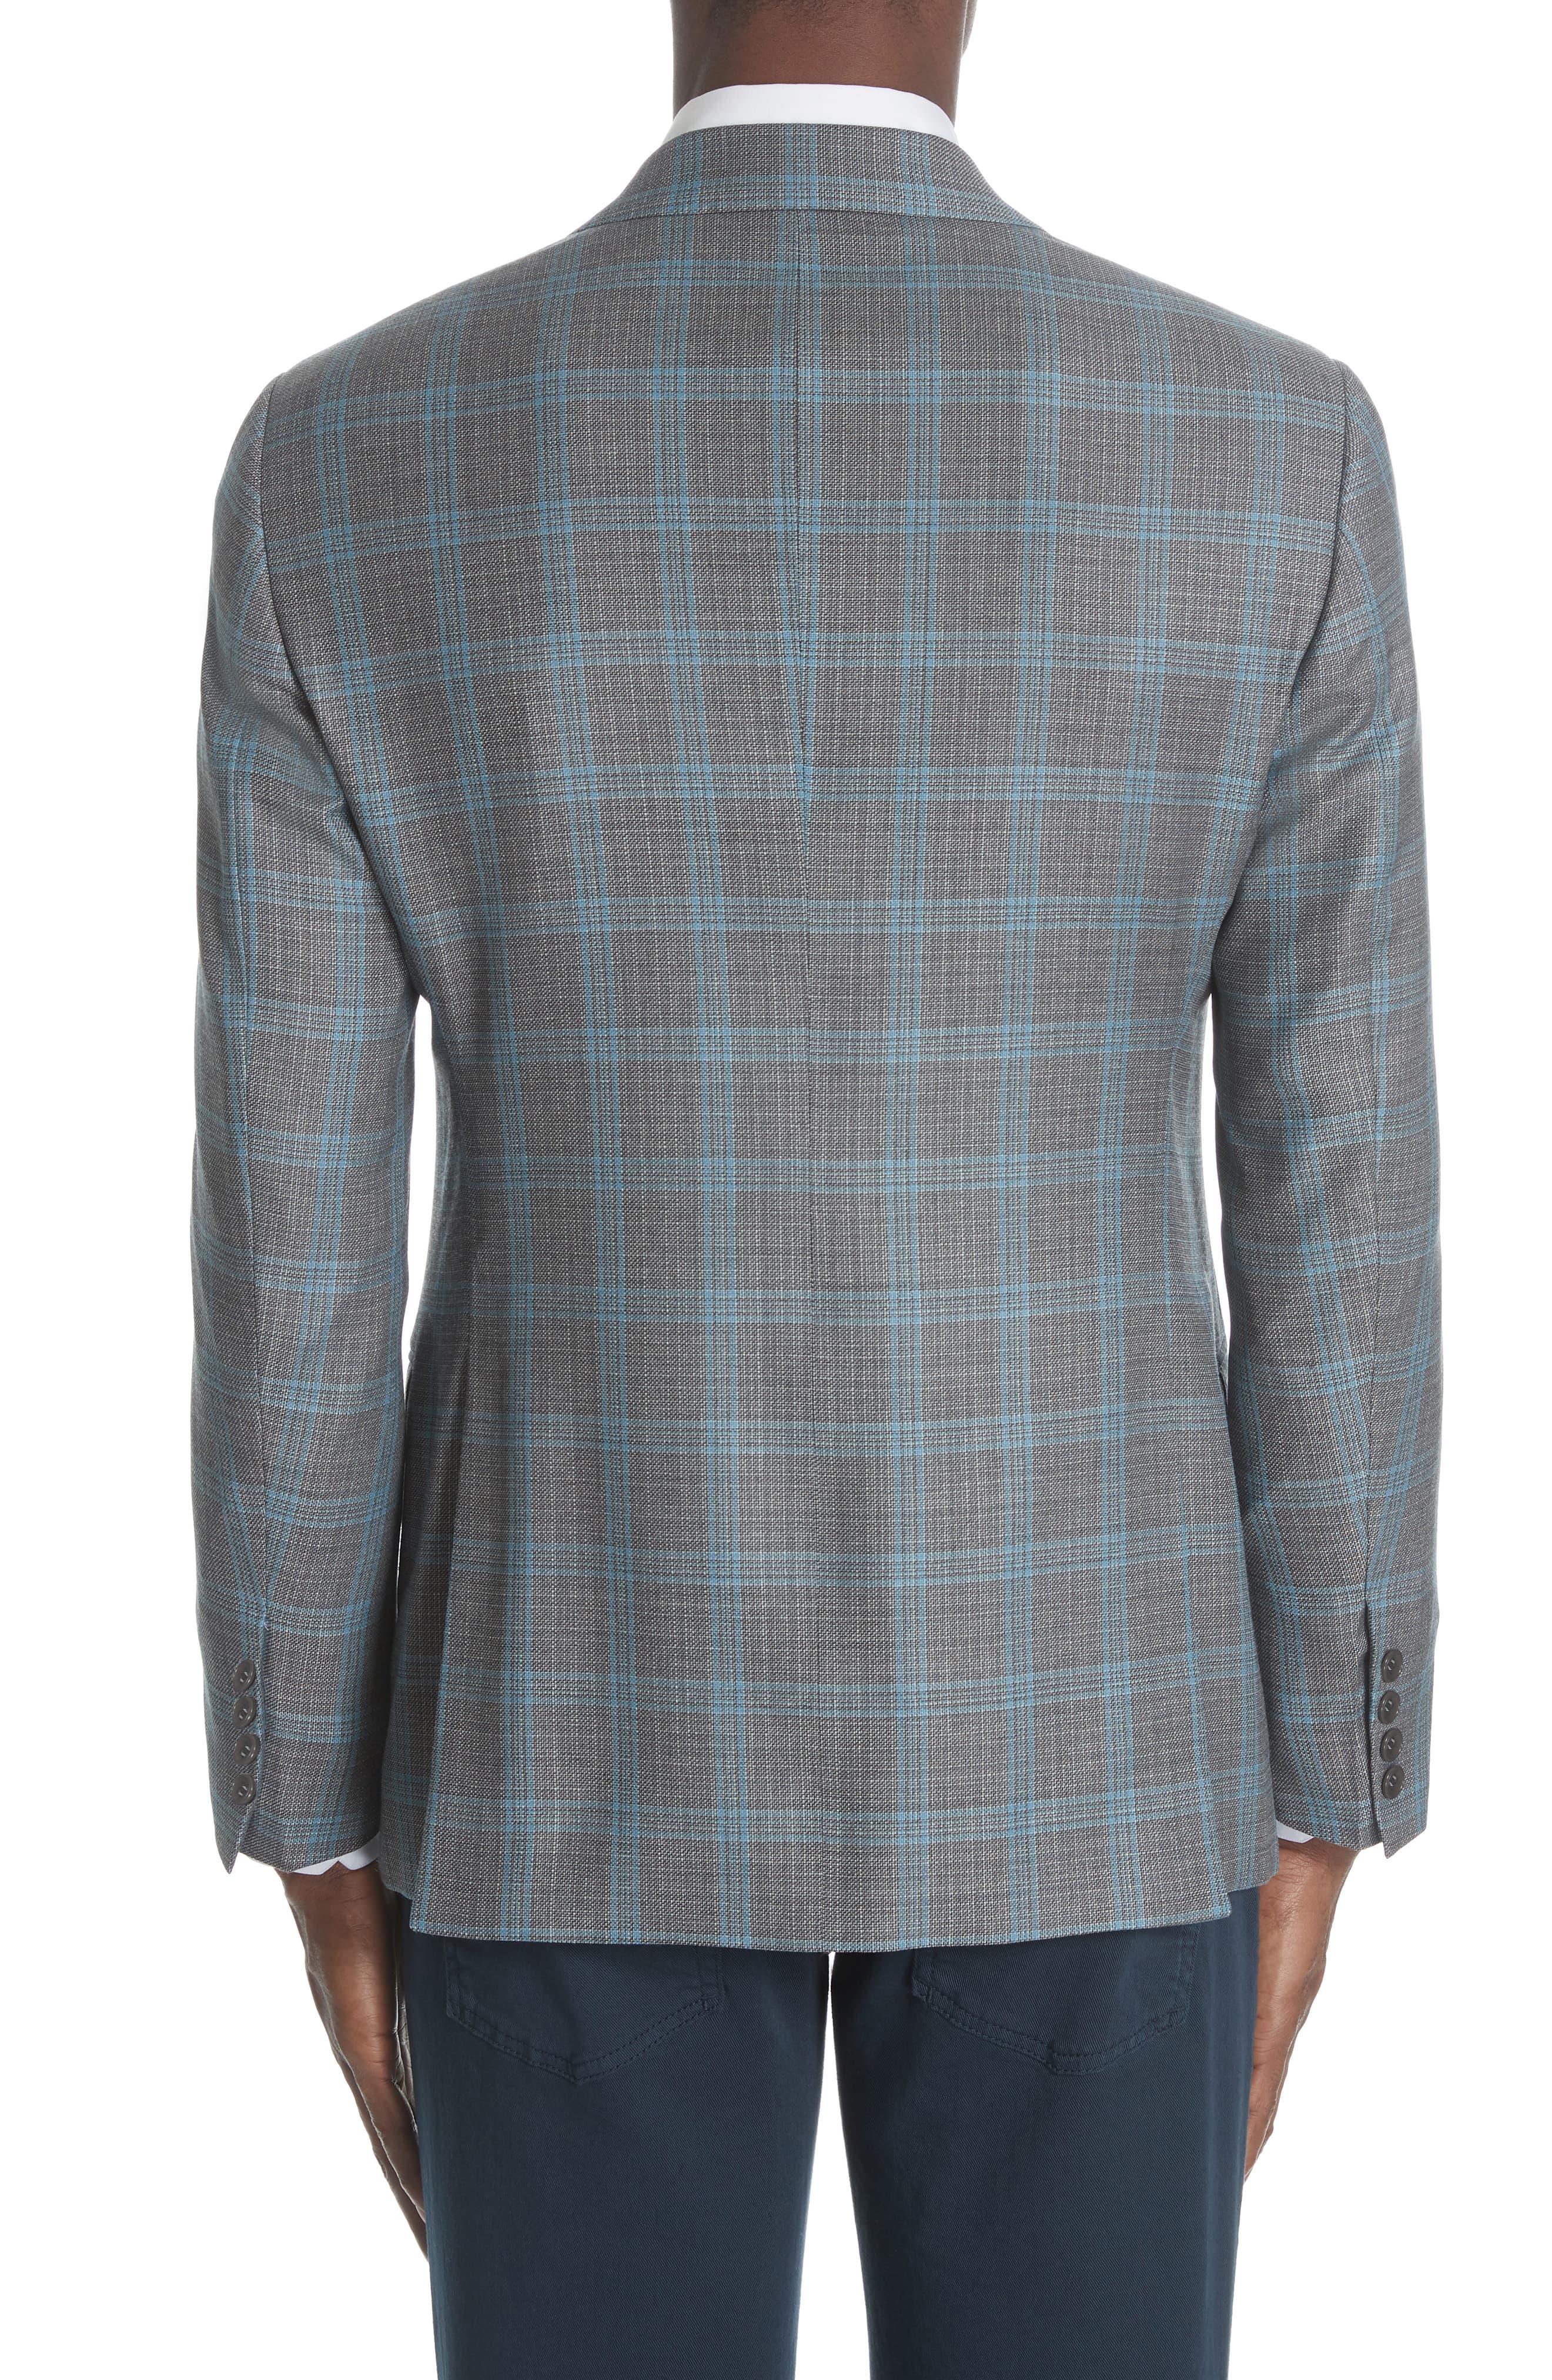 Giorgio Armani Classic Fit Plaid Wool Sport Coat in Gray for Men - Lyst